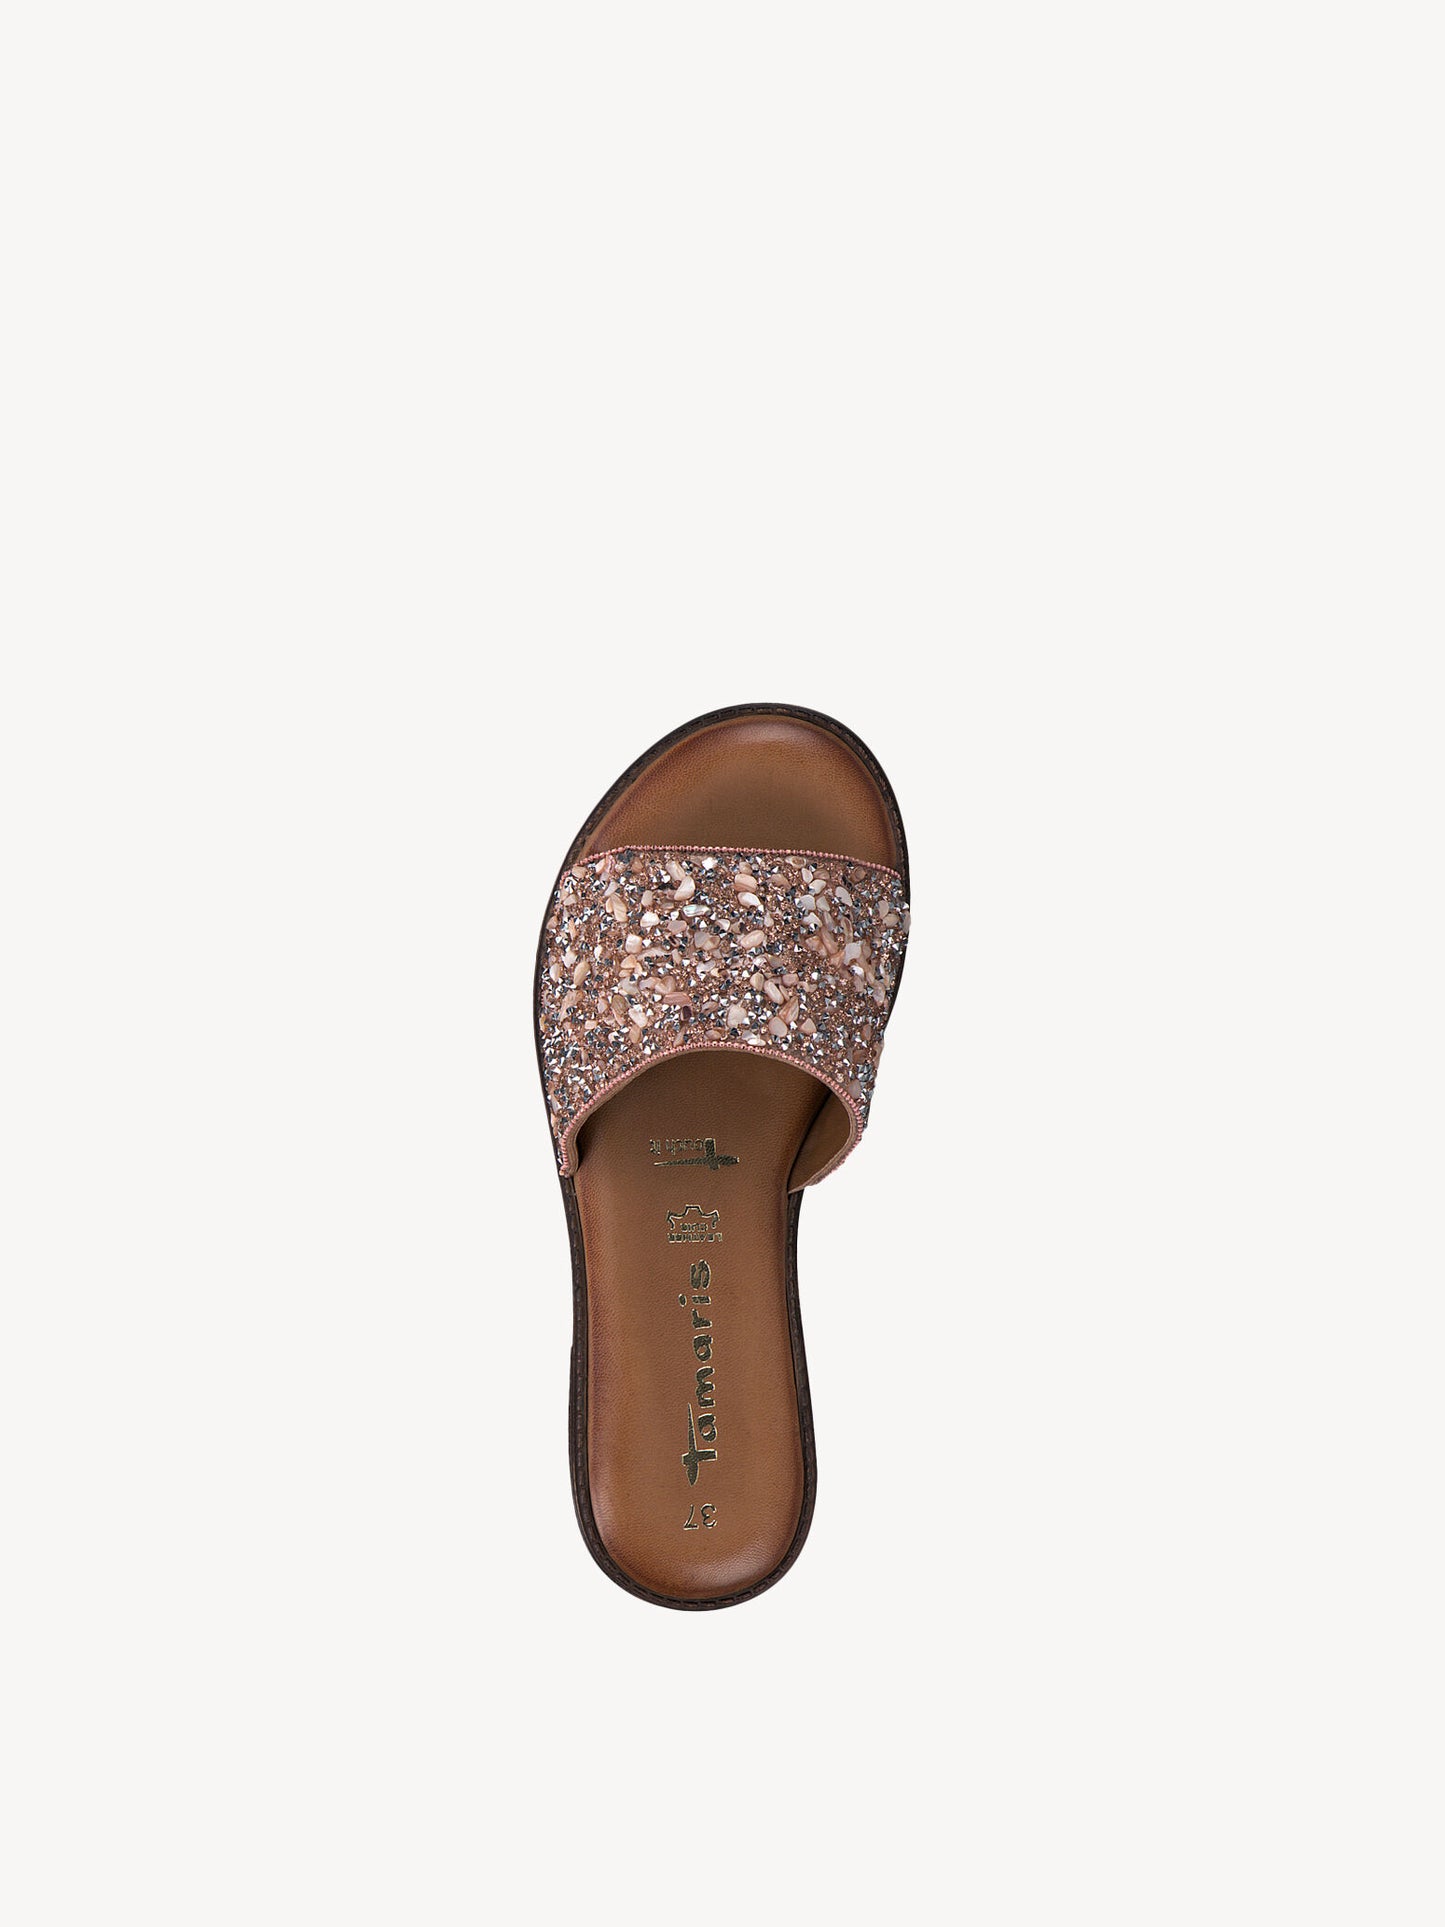 Tamaris Women's 1-27117-26 Leather Mule Sandals Copper Glam